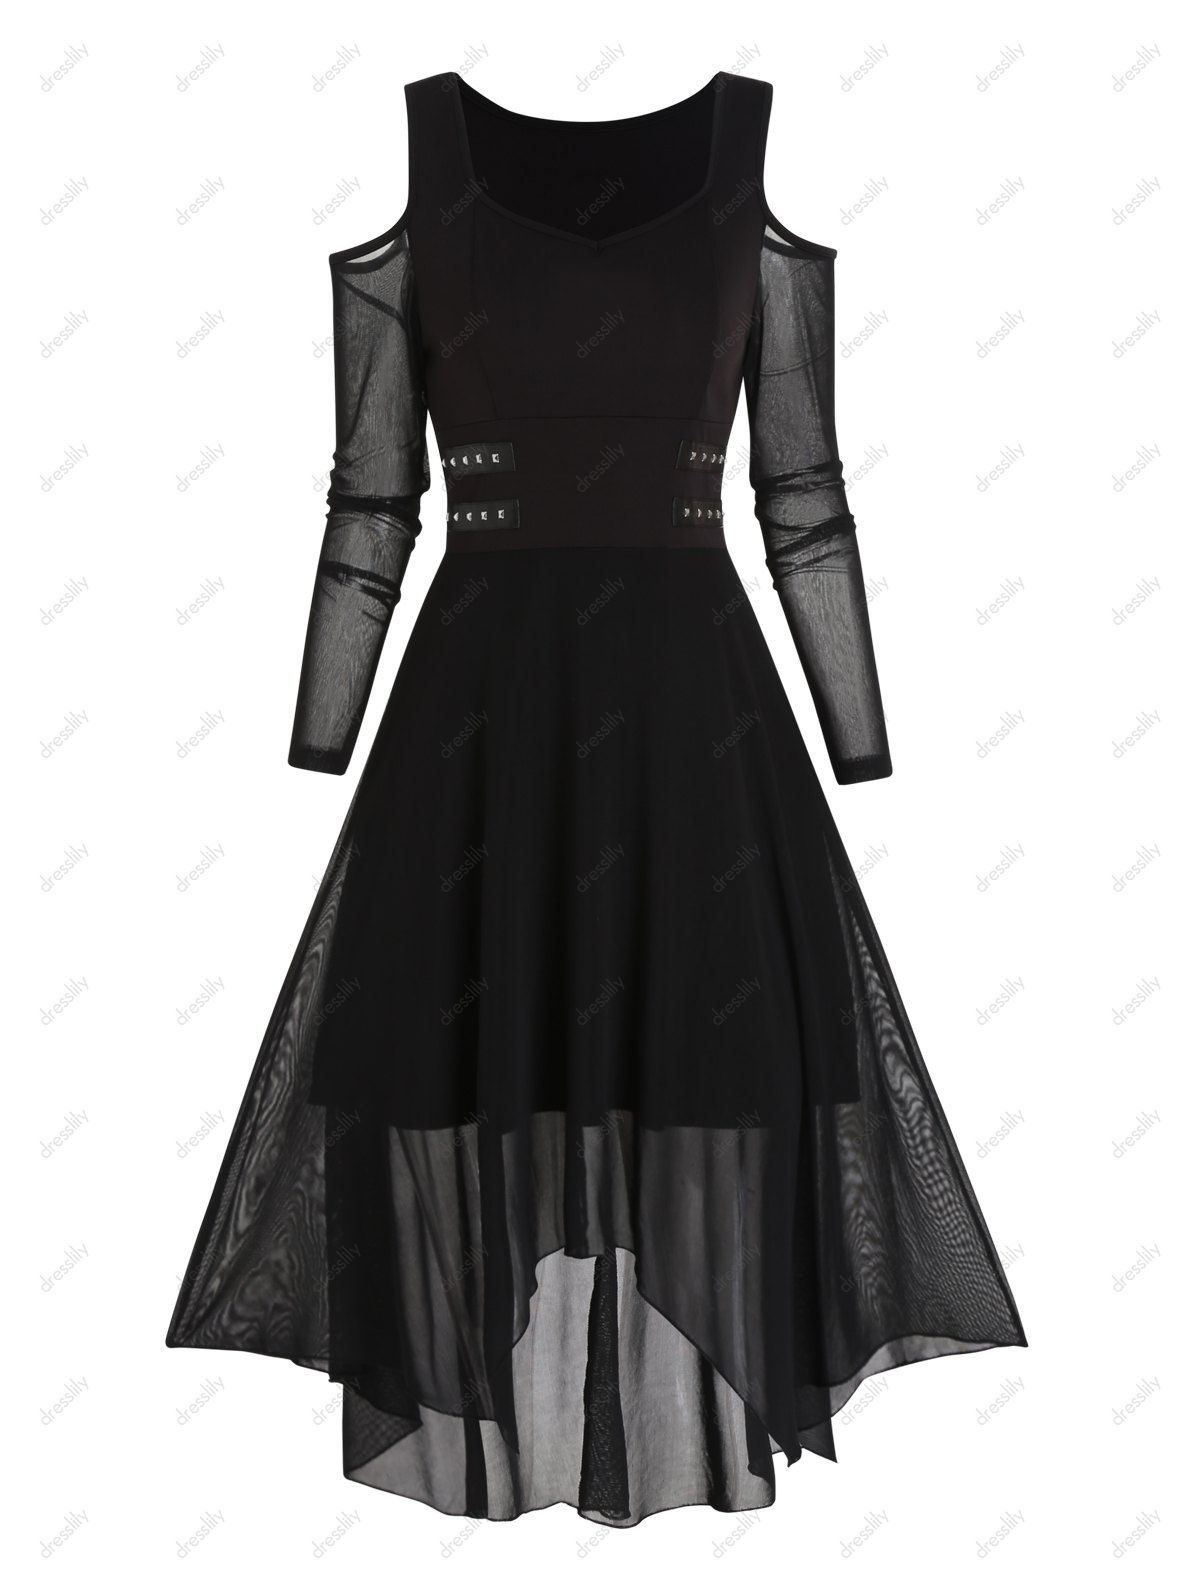 Gothic Dress Cold Shoulder Asymmetric Dress See Thru Mesh Long Sleeve Handkerchief Dress - BLACK M